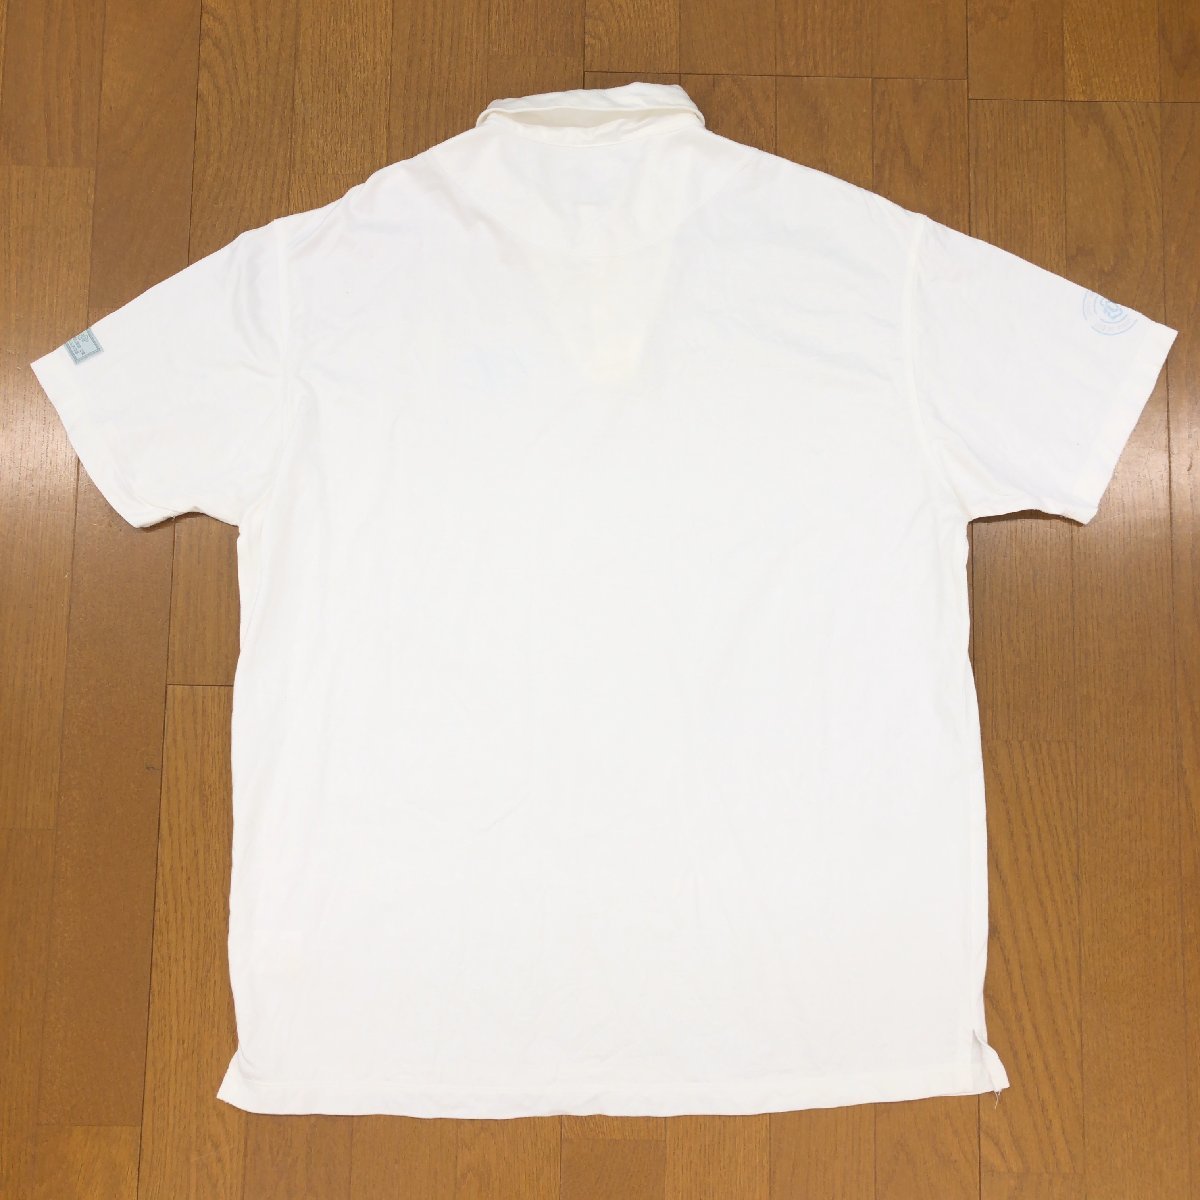 ZOY ゾーイ ロゴ刺繍 ゴルフシャツ 2(M) 白 ホワイト 半袖 ポロシャツ 国内正規品 メンズ 紳士_画像2